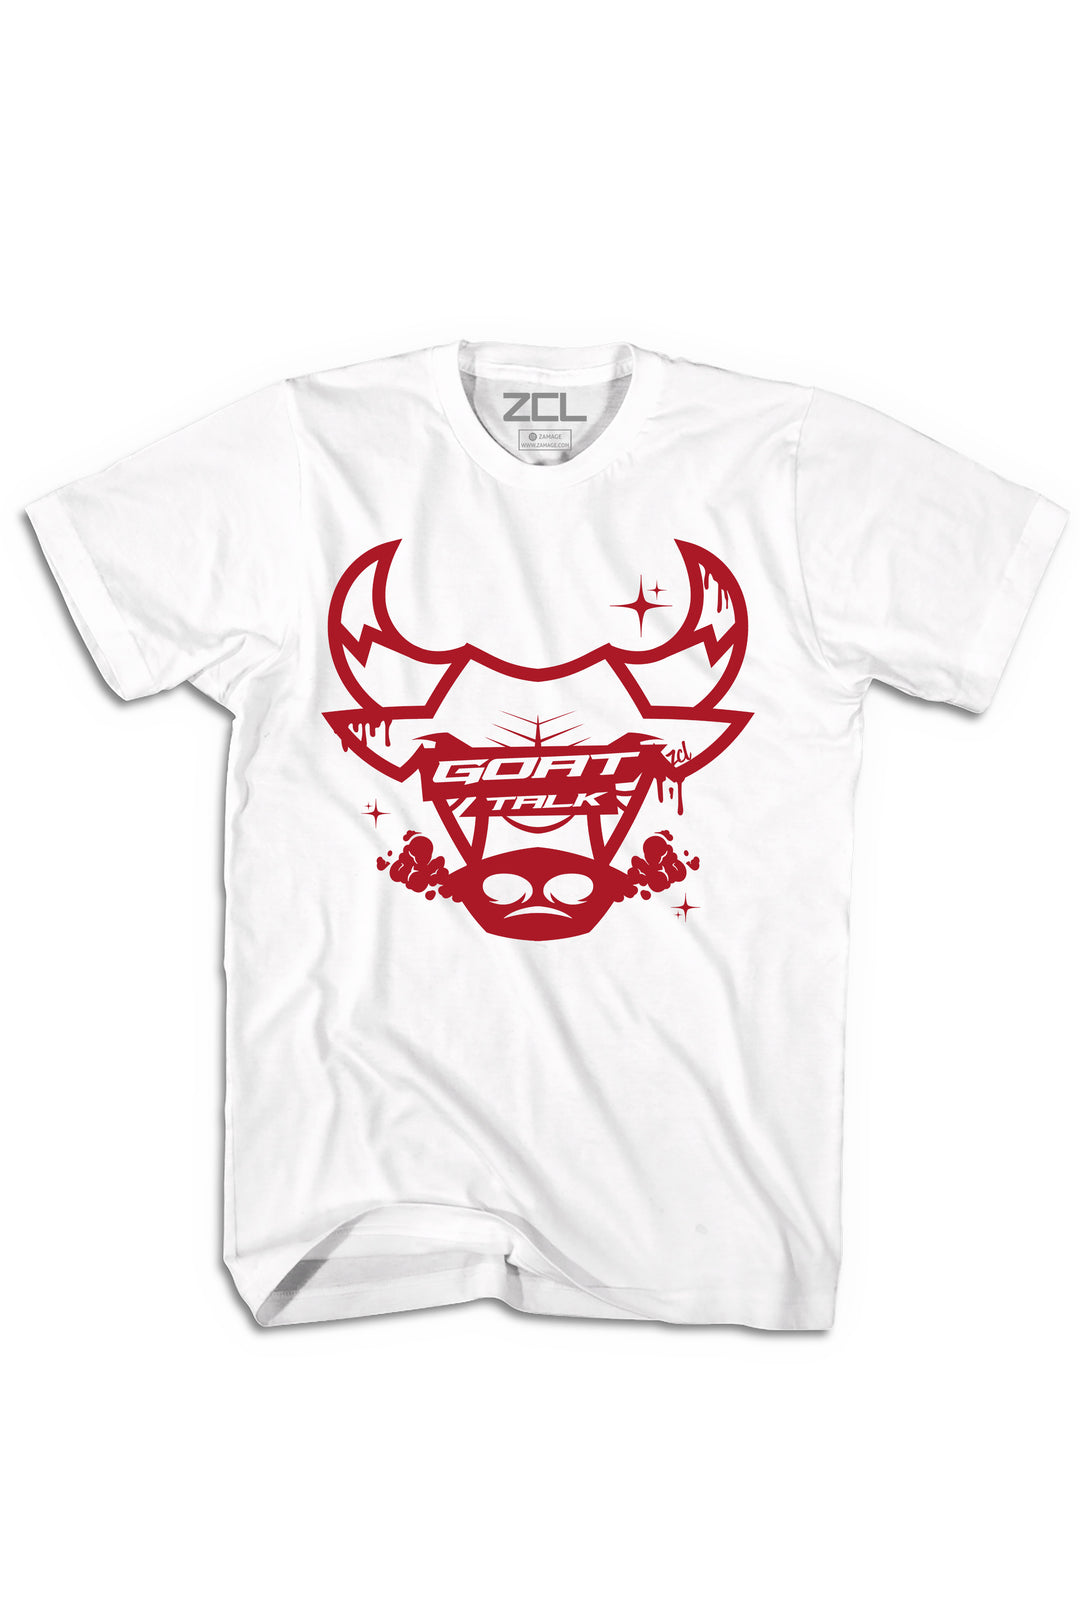 Goat Talk Tee (Red Logo) - Zamage